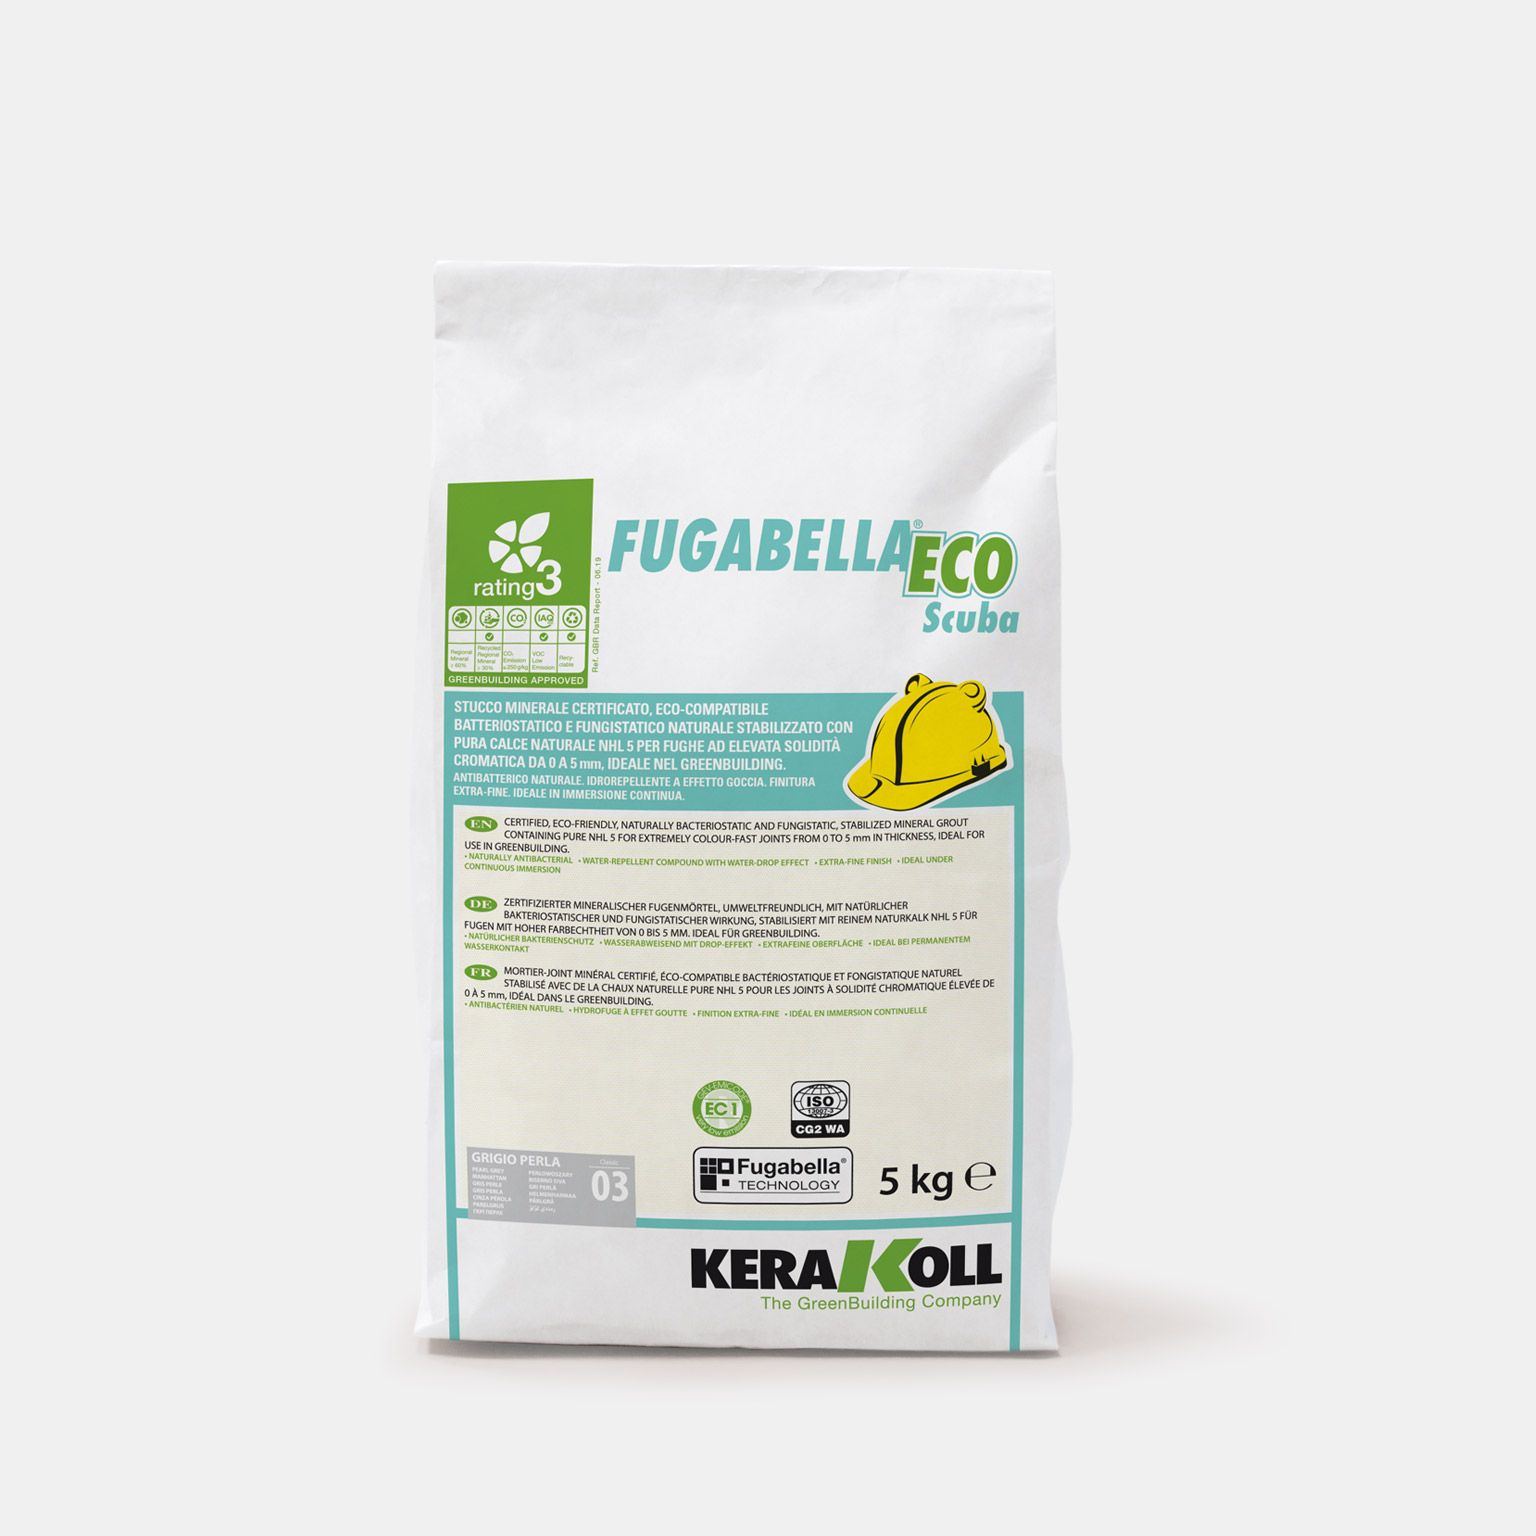 Fugabella Eco Scuba - immagine pack